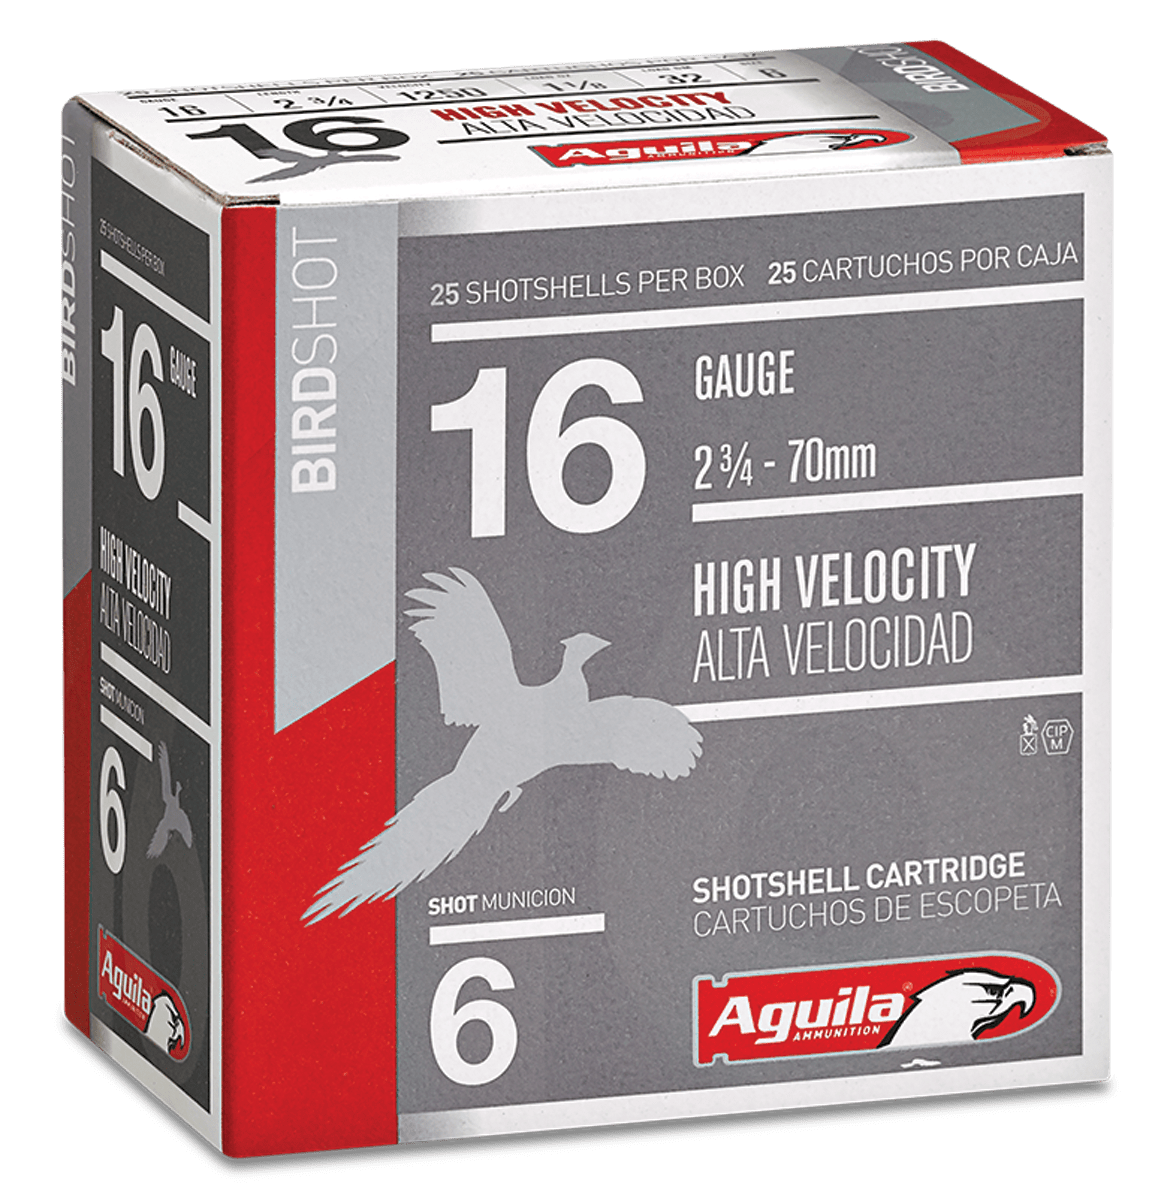 Aguila Aguila High Velocity Shotgun Game Load 16 Ga. 2.75 In. 1 1/8 Oz. 6 Shot 25 Rd. Ammo